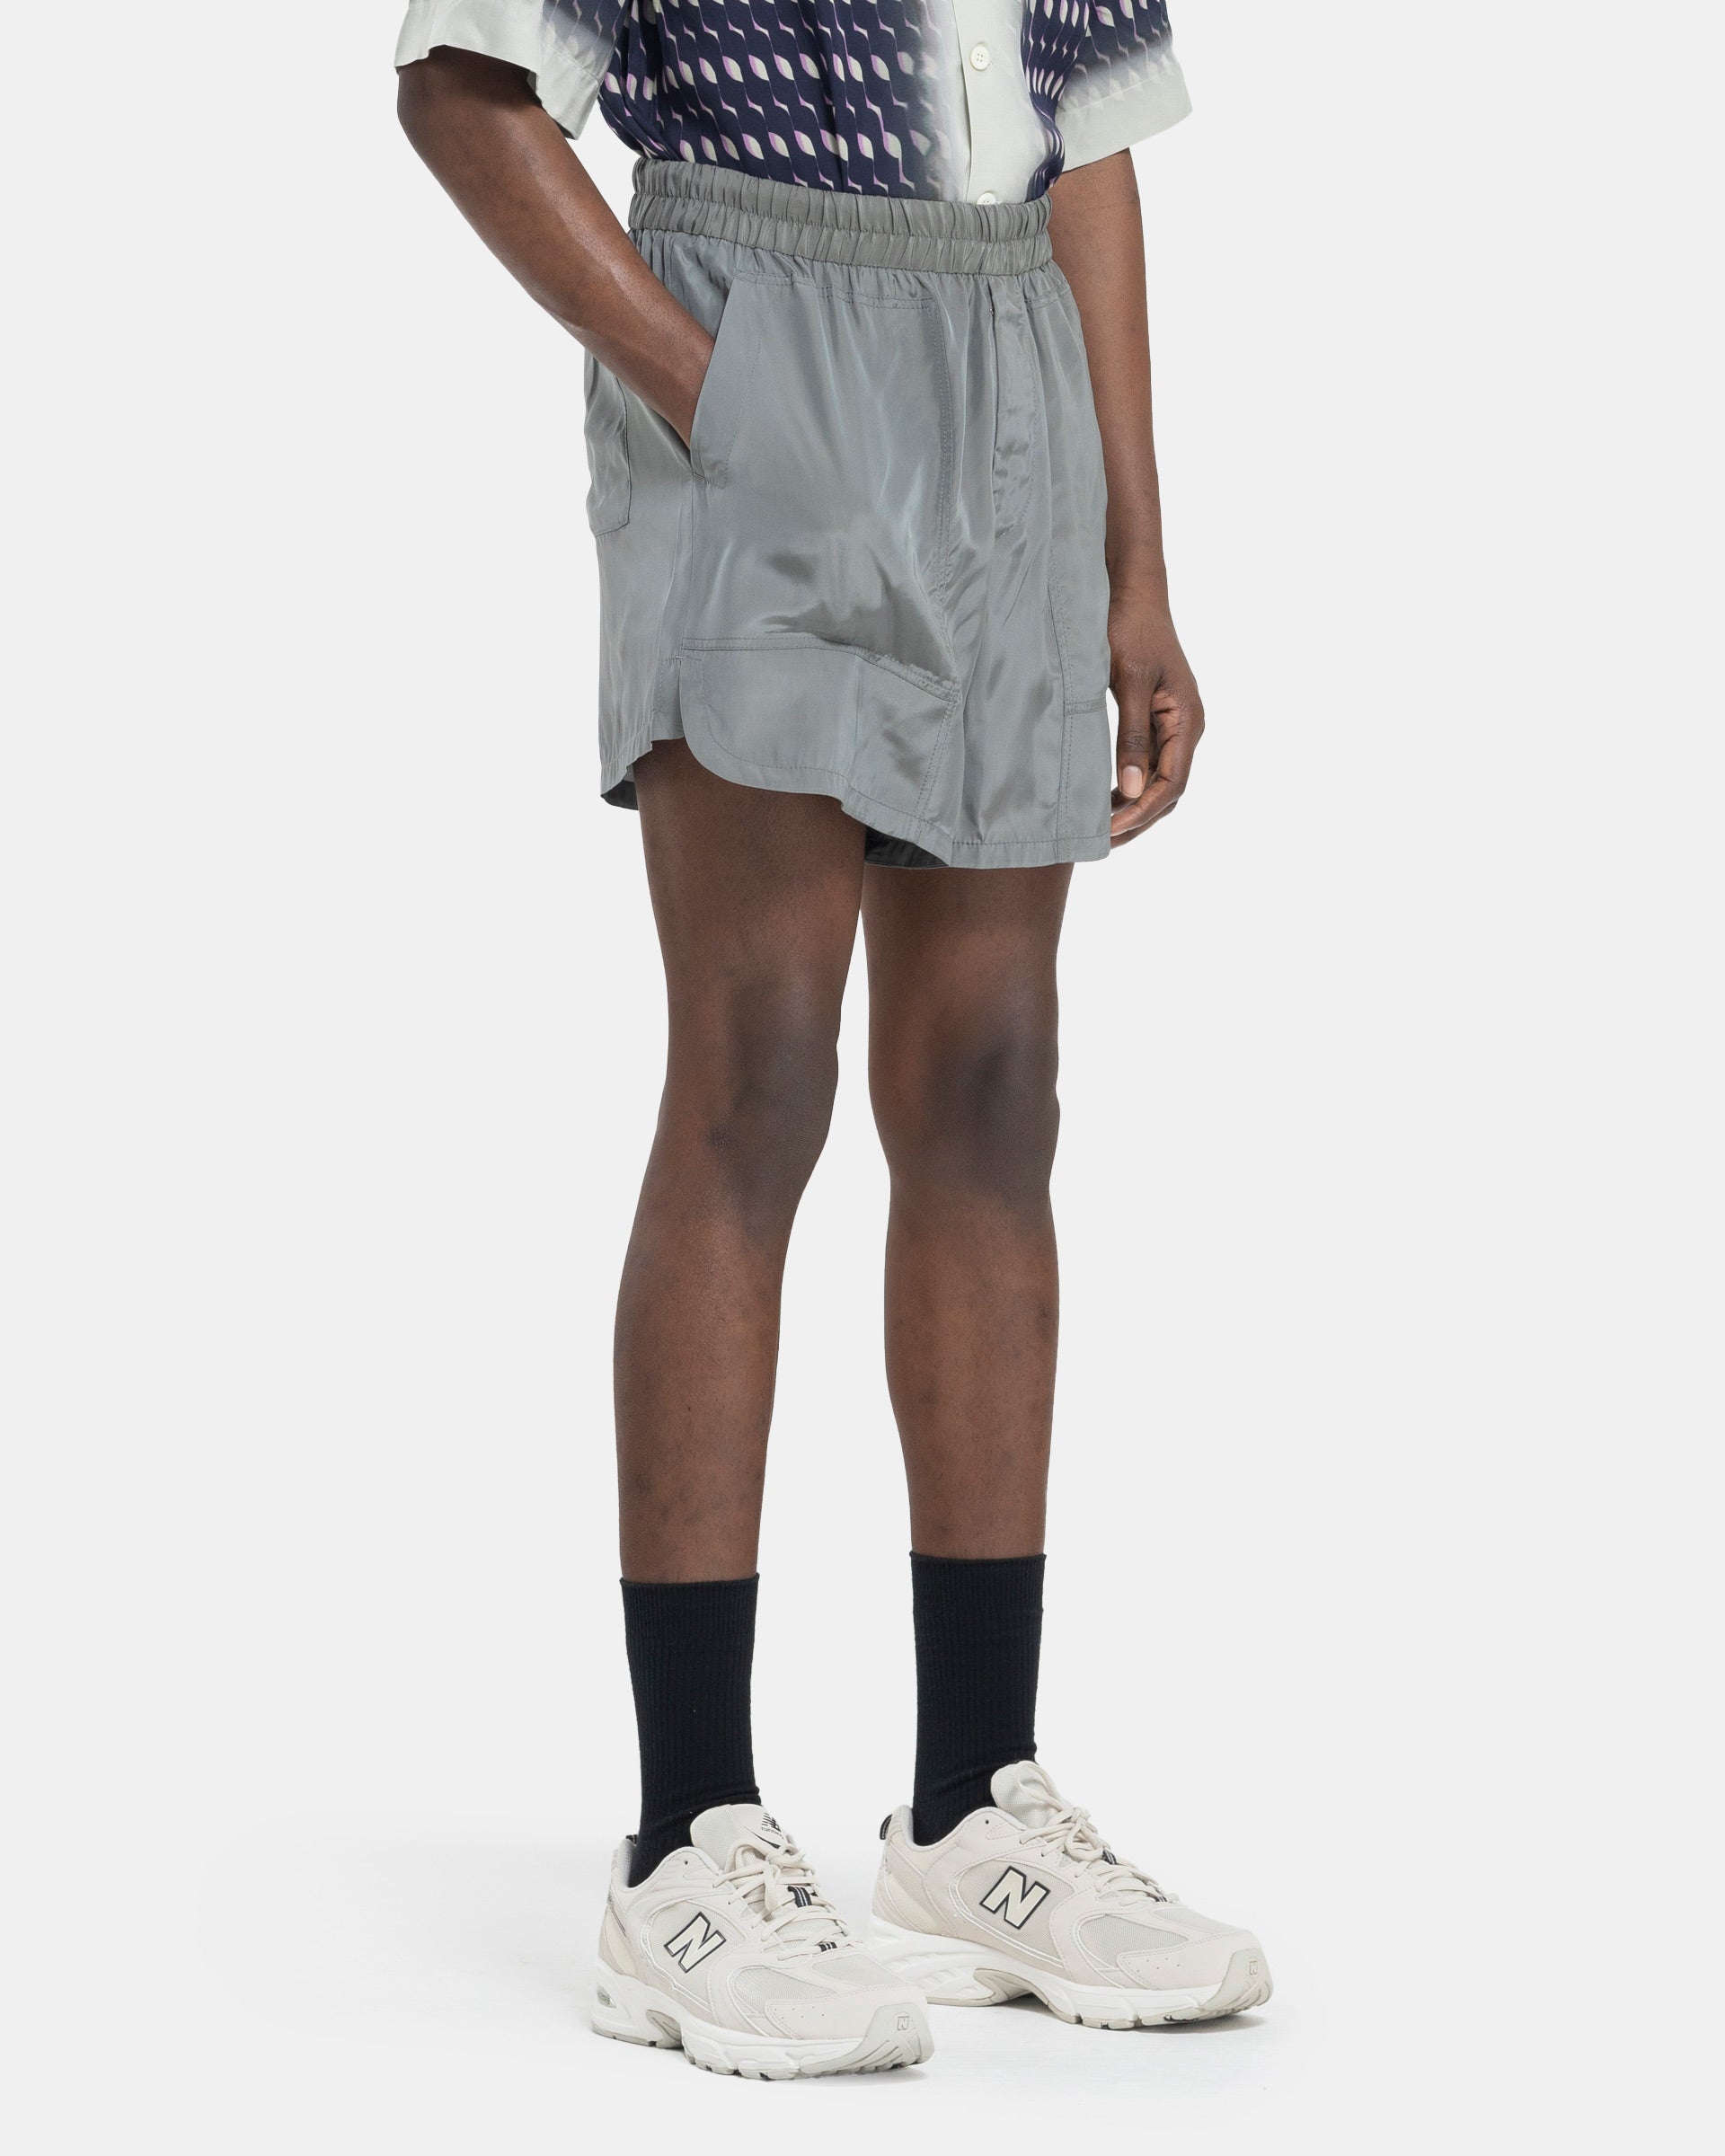 Model wearing Dries Van Noten Pooles Shorts in Grey on white background